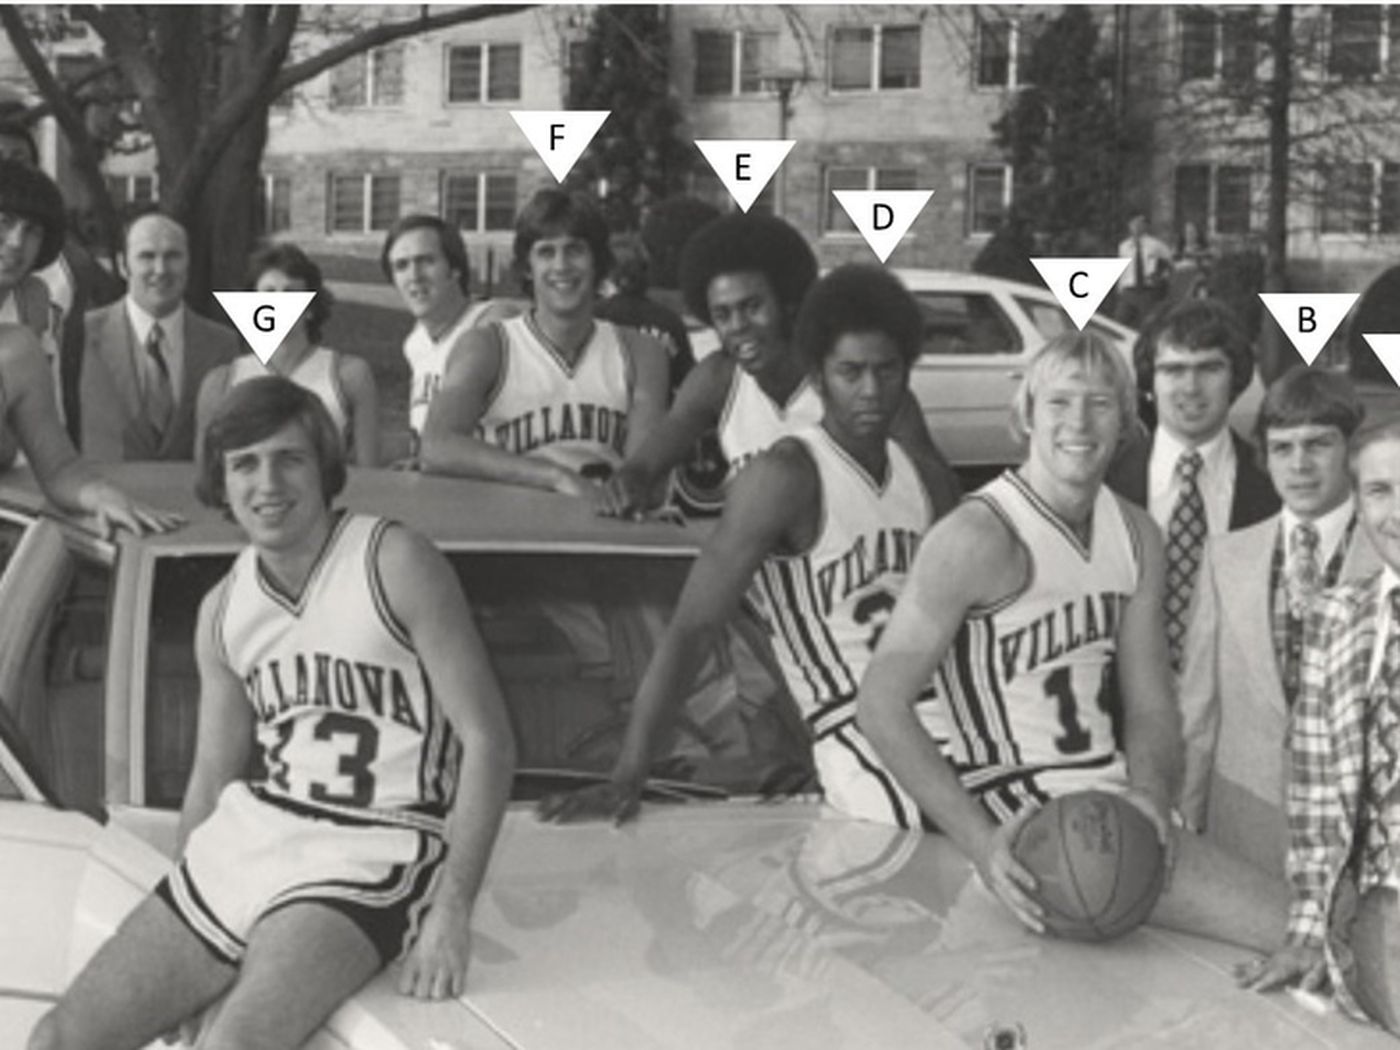 1977: Villanova wildcats